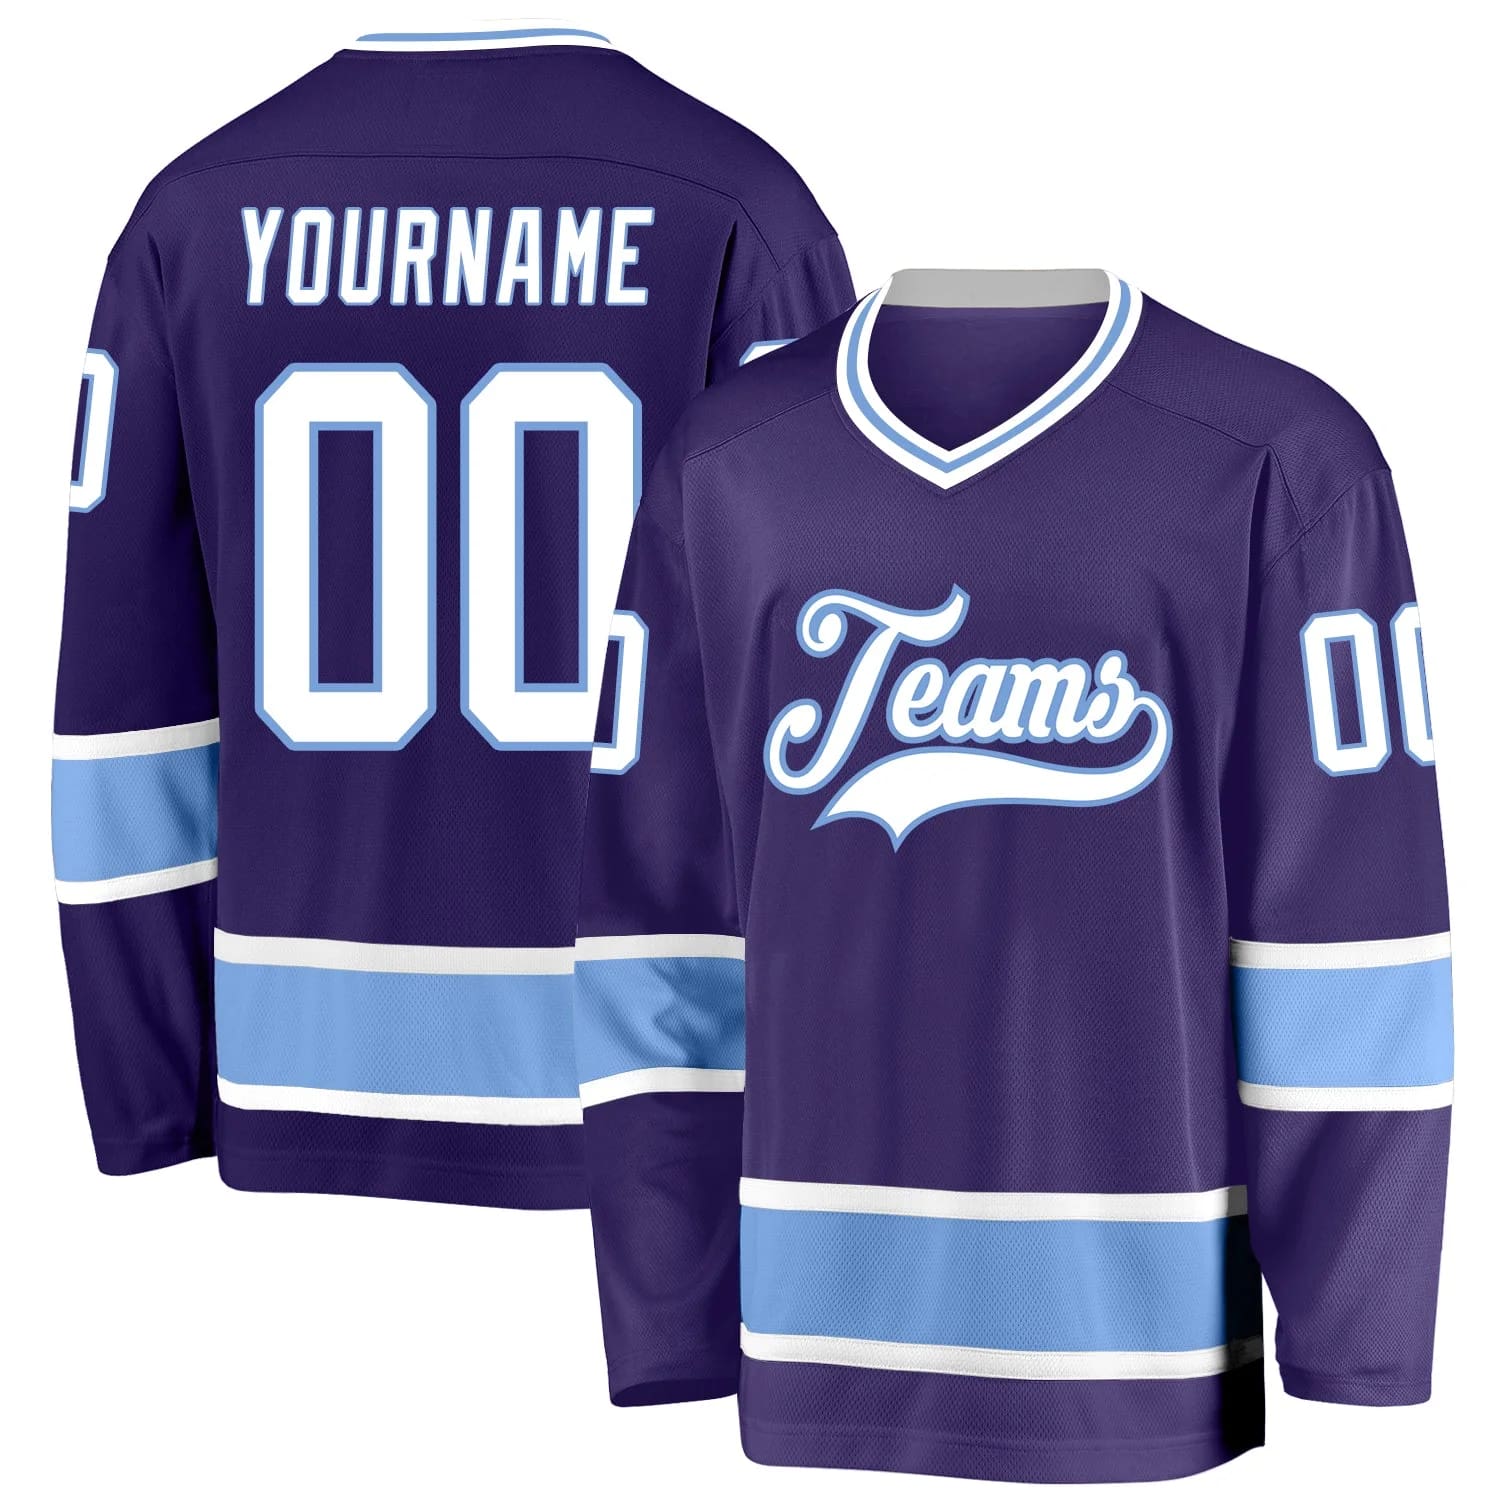 Stitched And Print Purple White-light Blue Hockey Jersey Custom